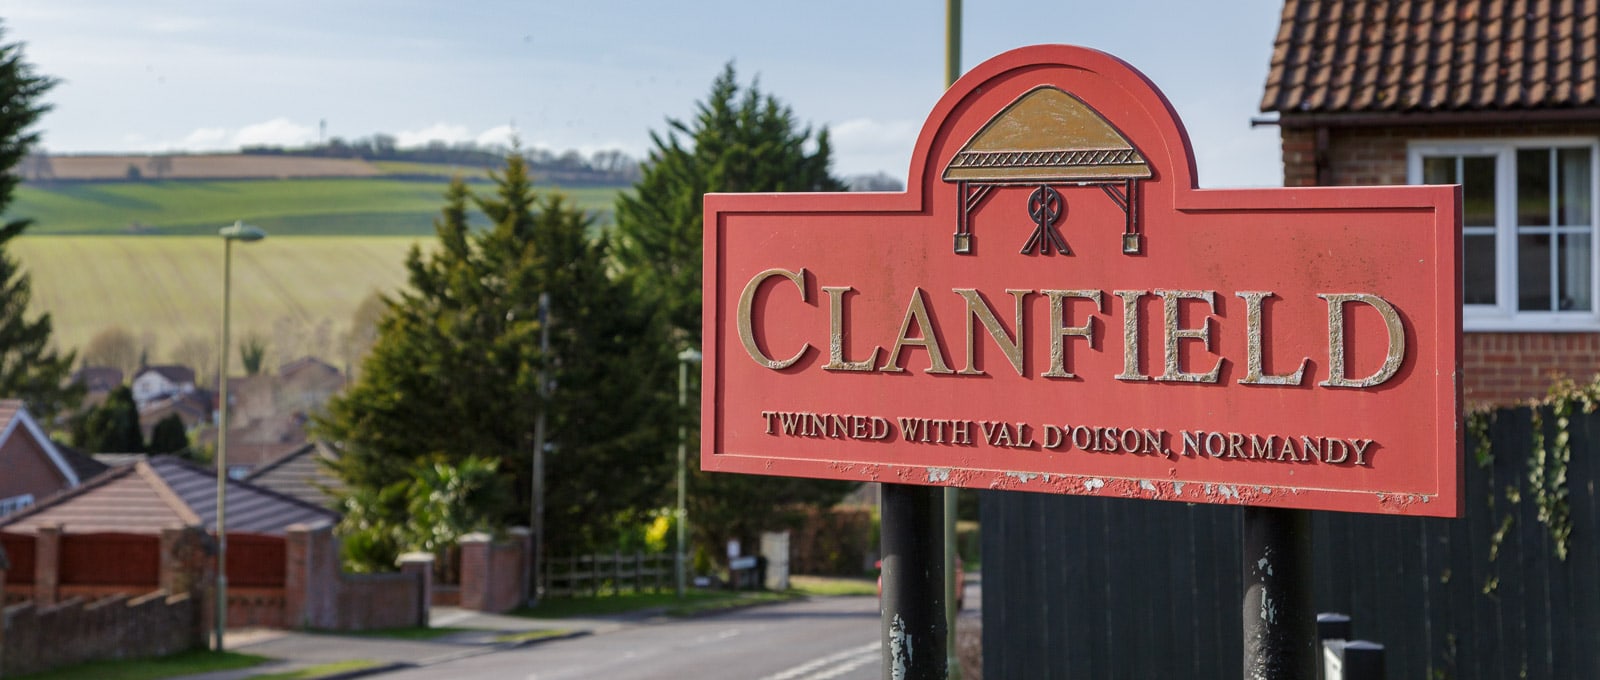 clanfield village road sign